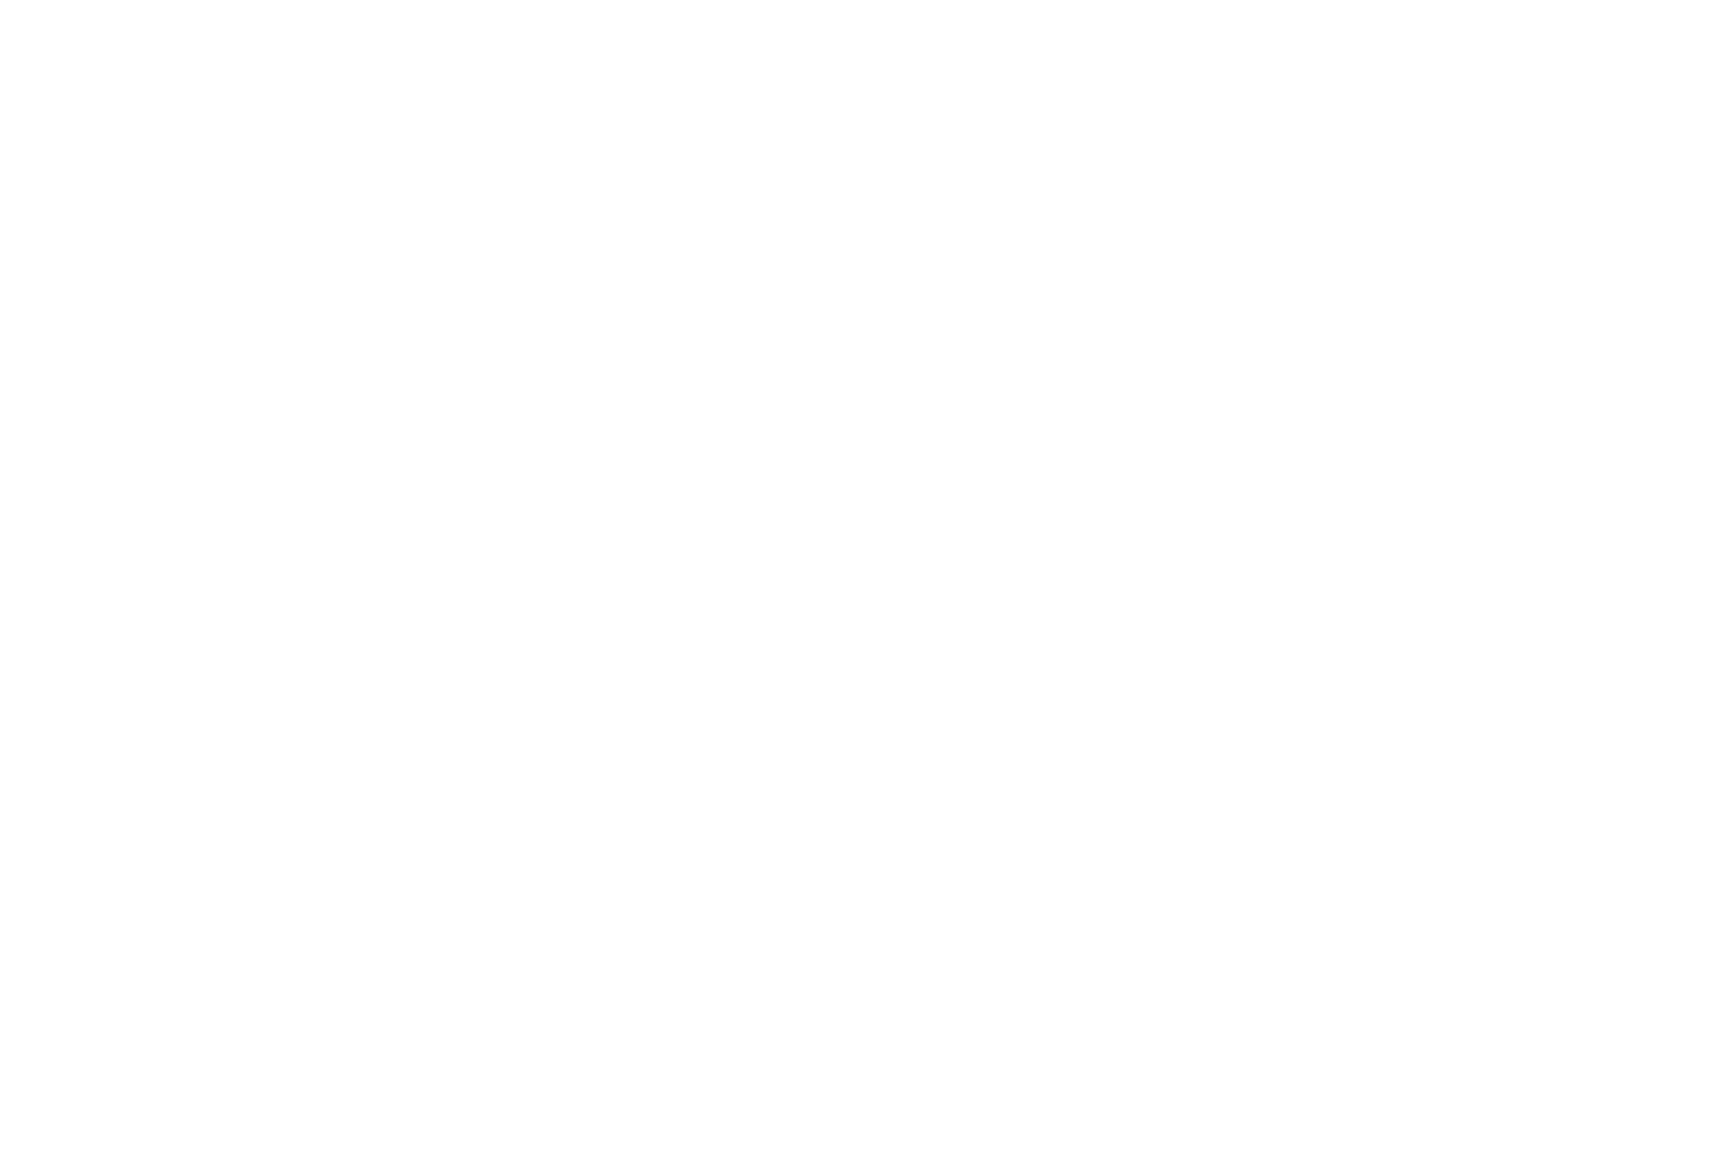 WINNER - BEST EDITING - Los Angeles Cinematography AWARDS LACA - 2023